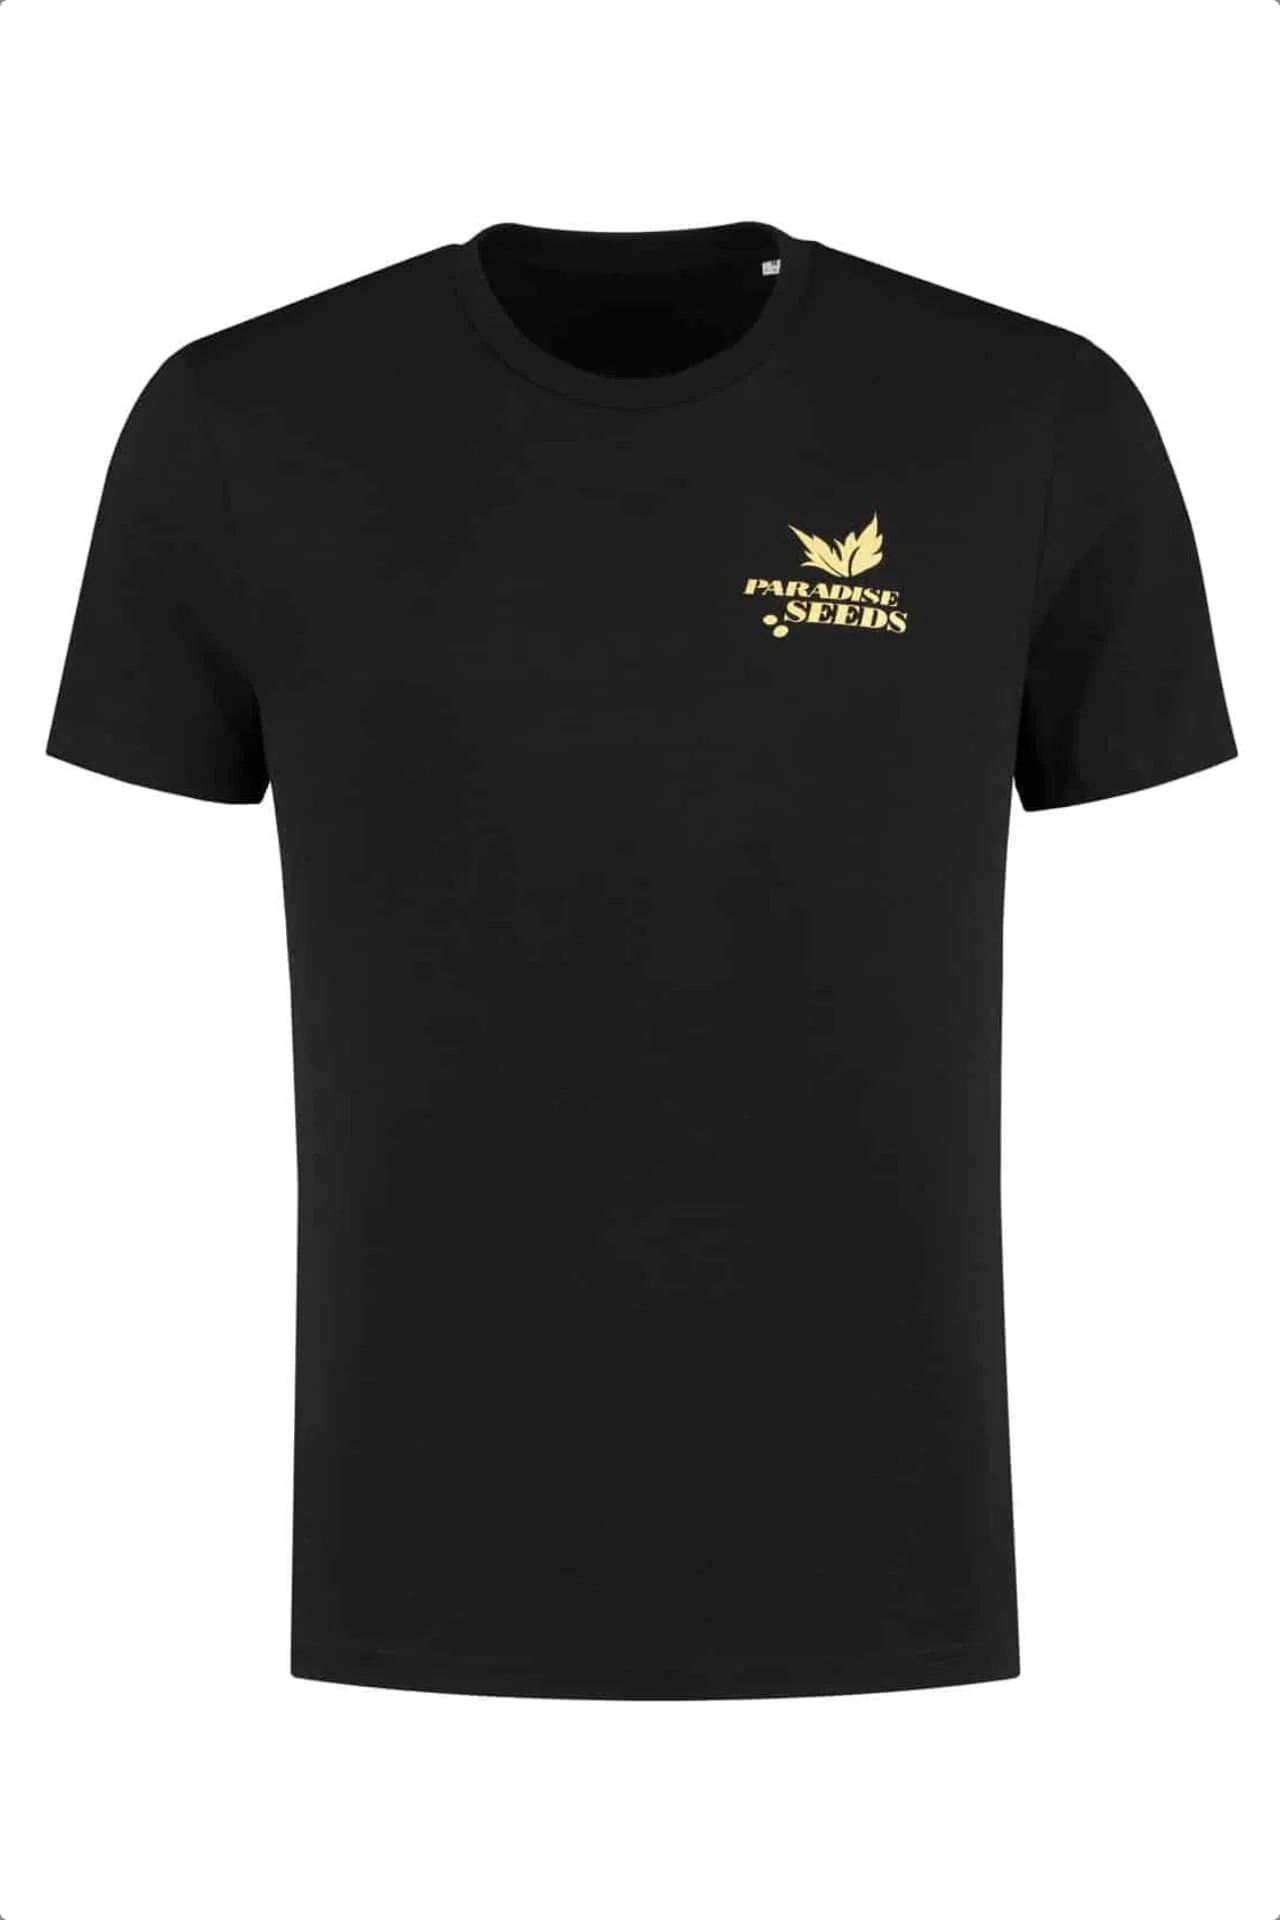 T-Shirt for Men with Paradise Seeds Golden Logo | Paradise Seeds Webshop